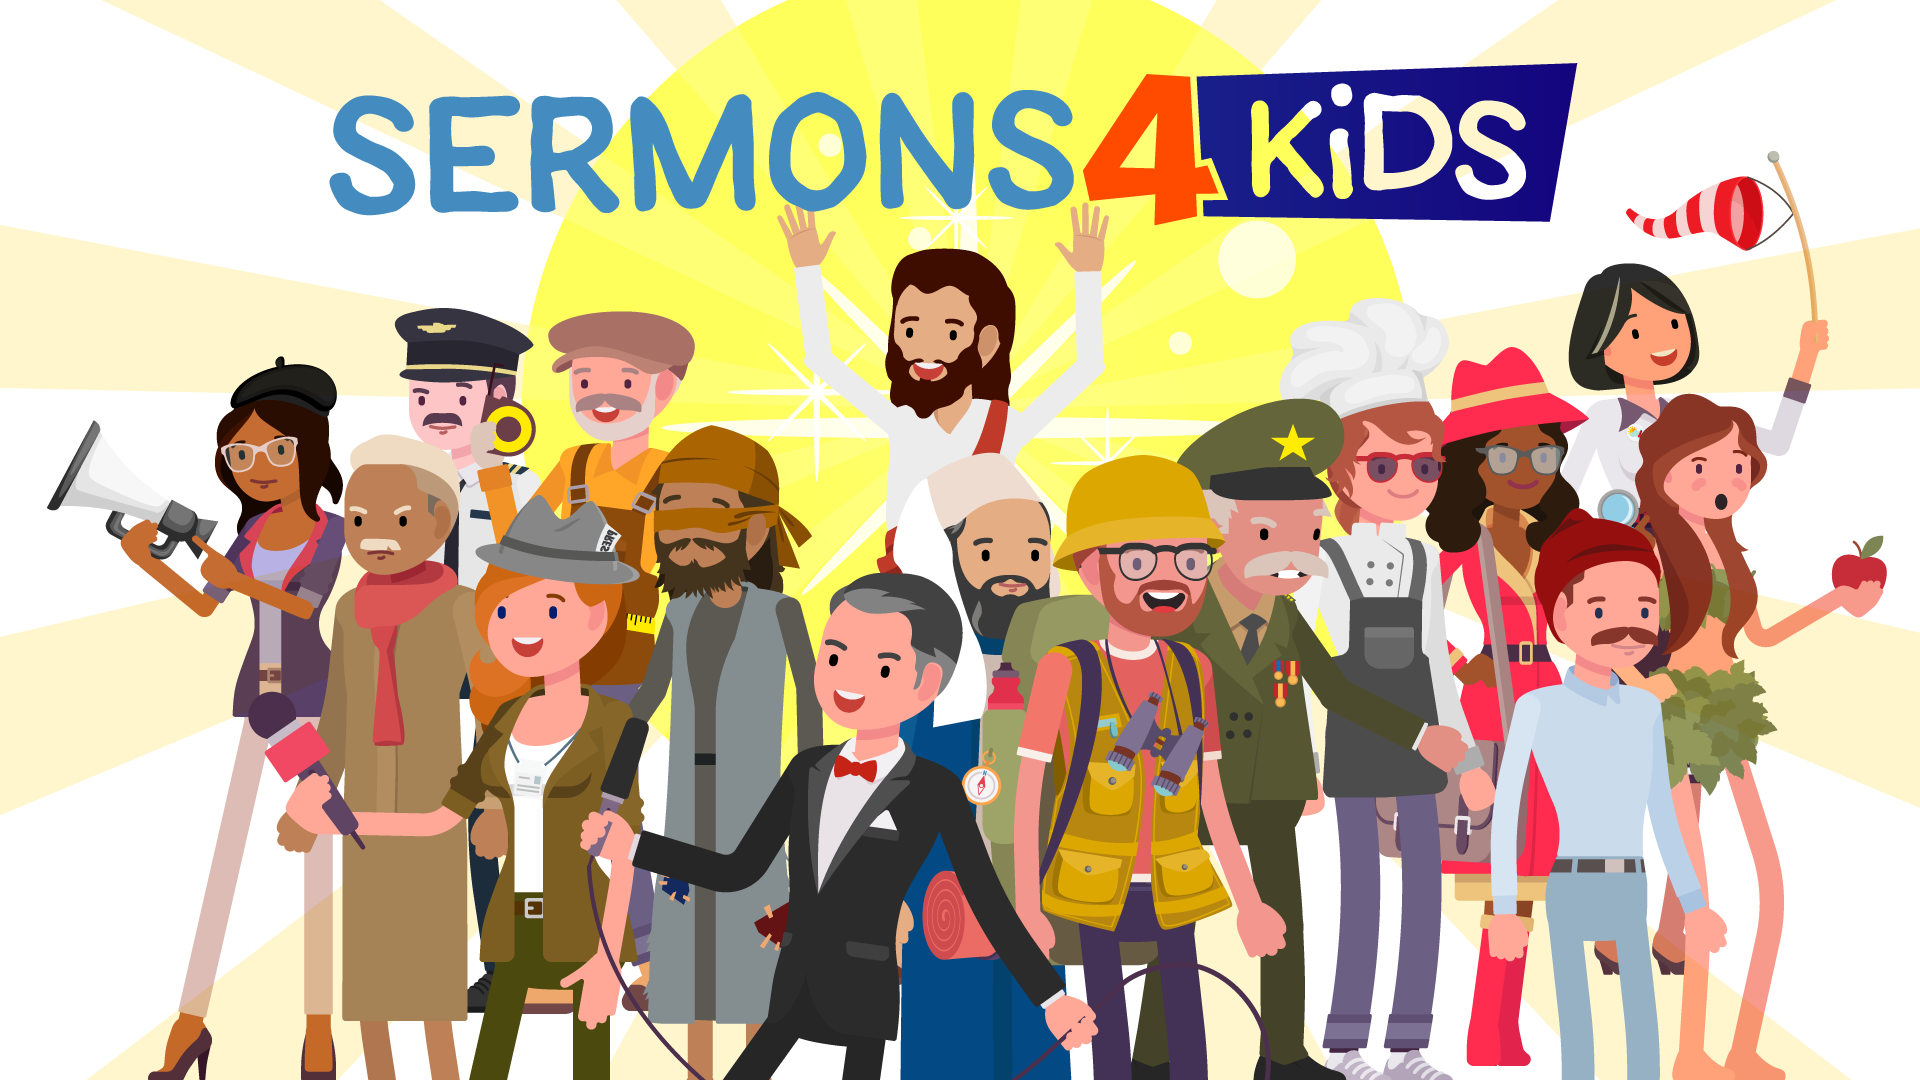 Sermons4Kids